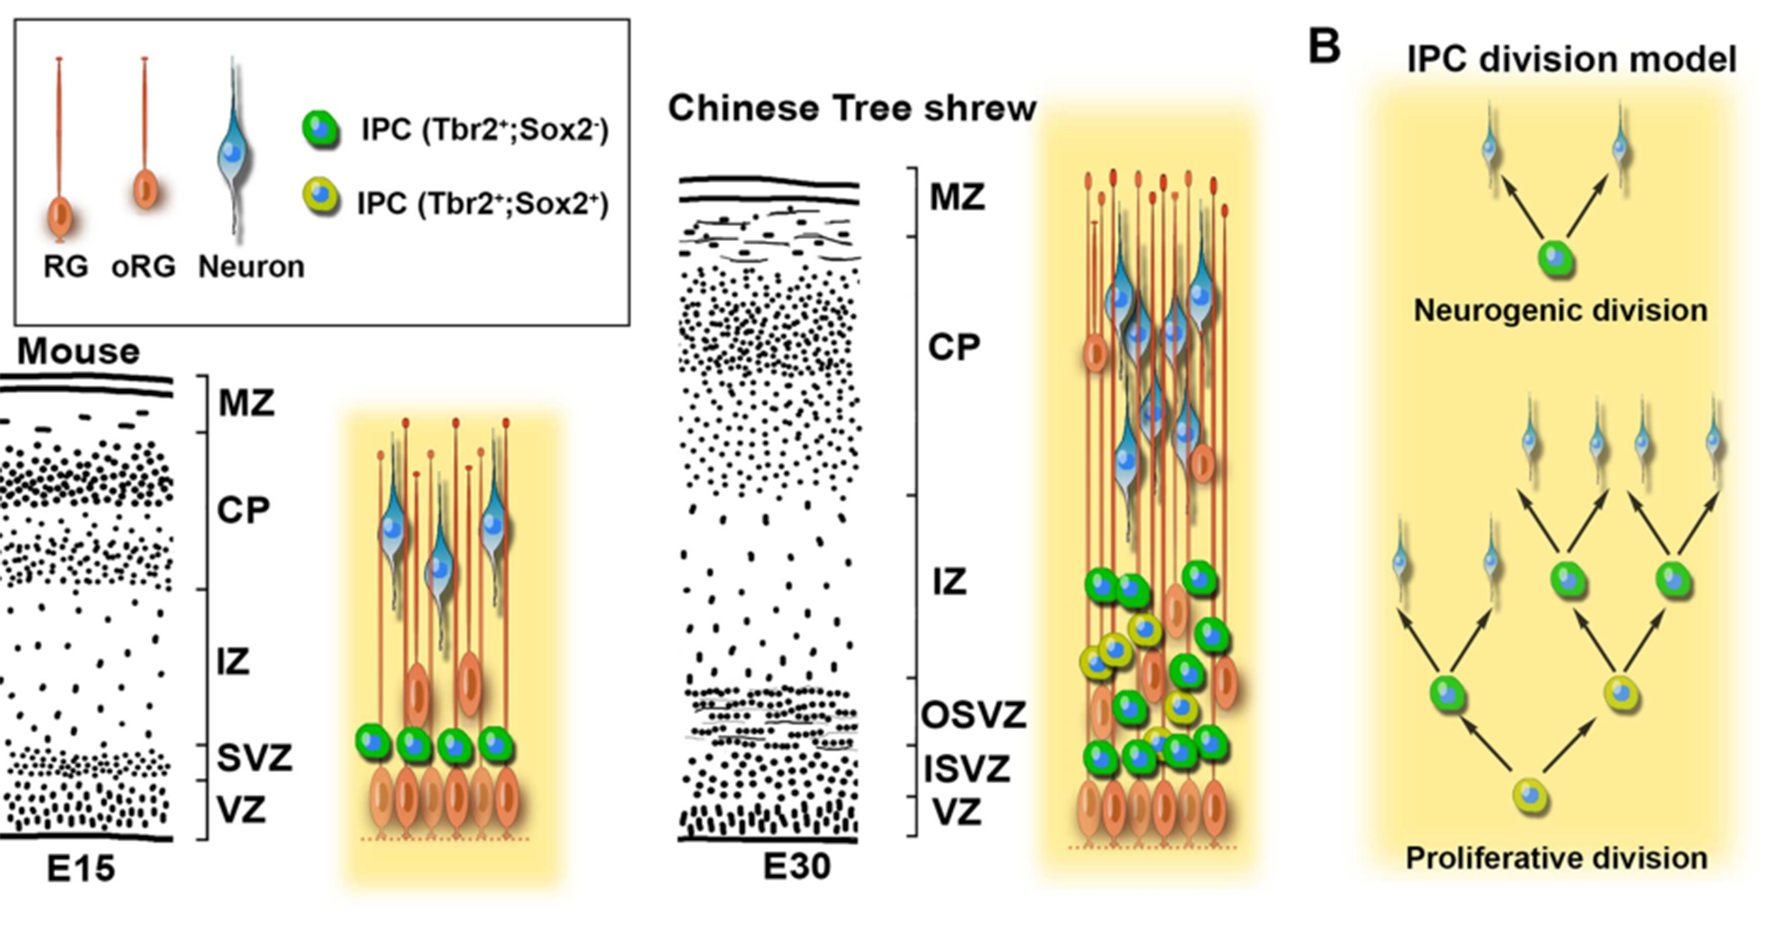 Abundant self-amplifying intermediate progenitors in the subventricular zone of the Chinese tree shrew neocortex